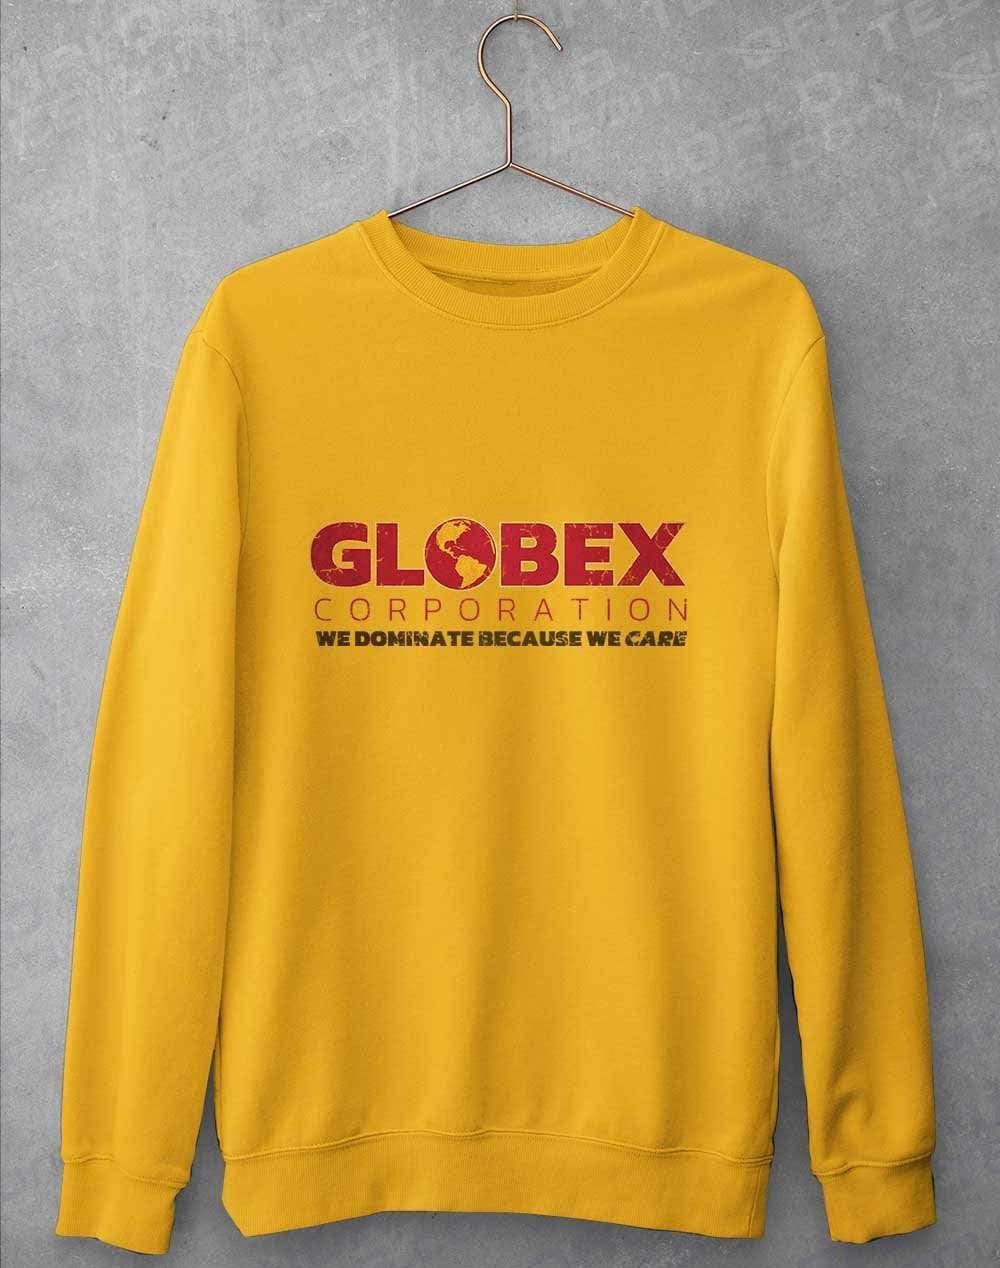 Globex Corporation Sweatshirt S / Gold  - Off World Tees